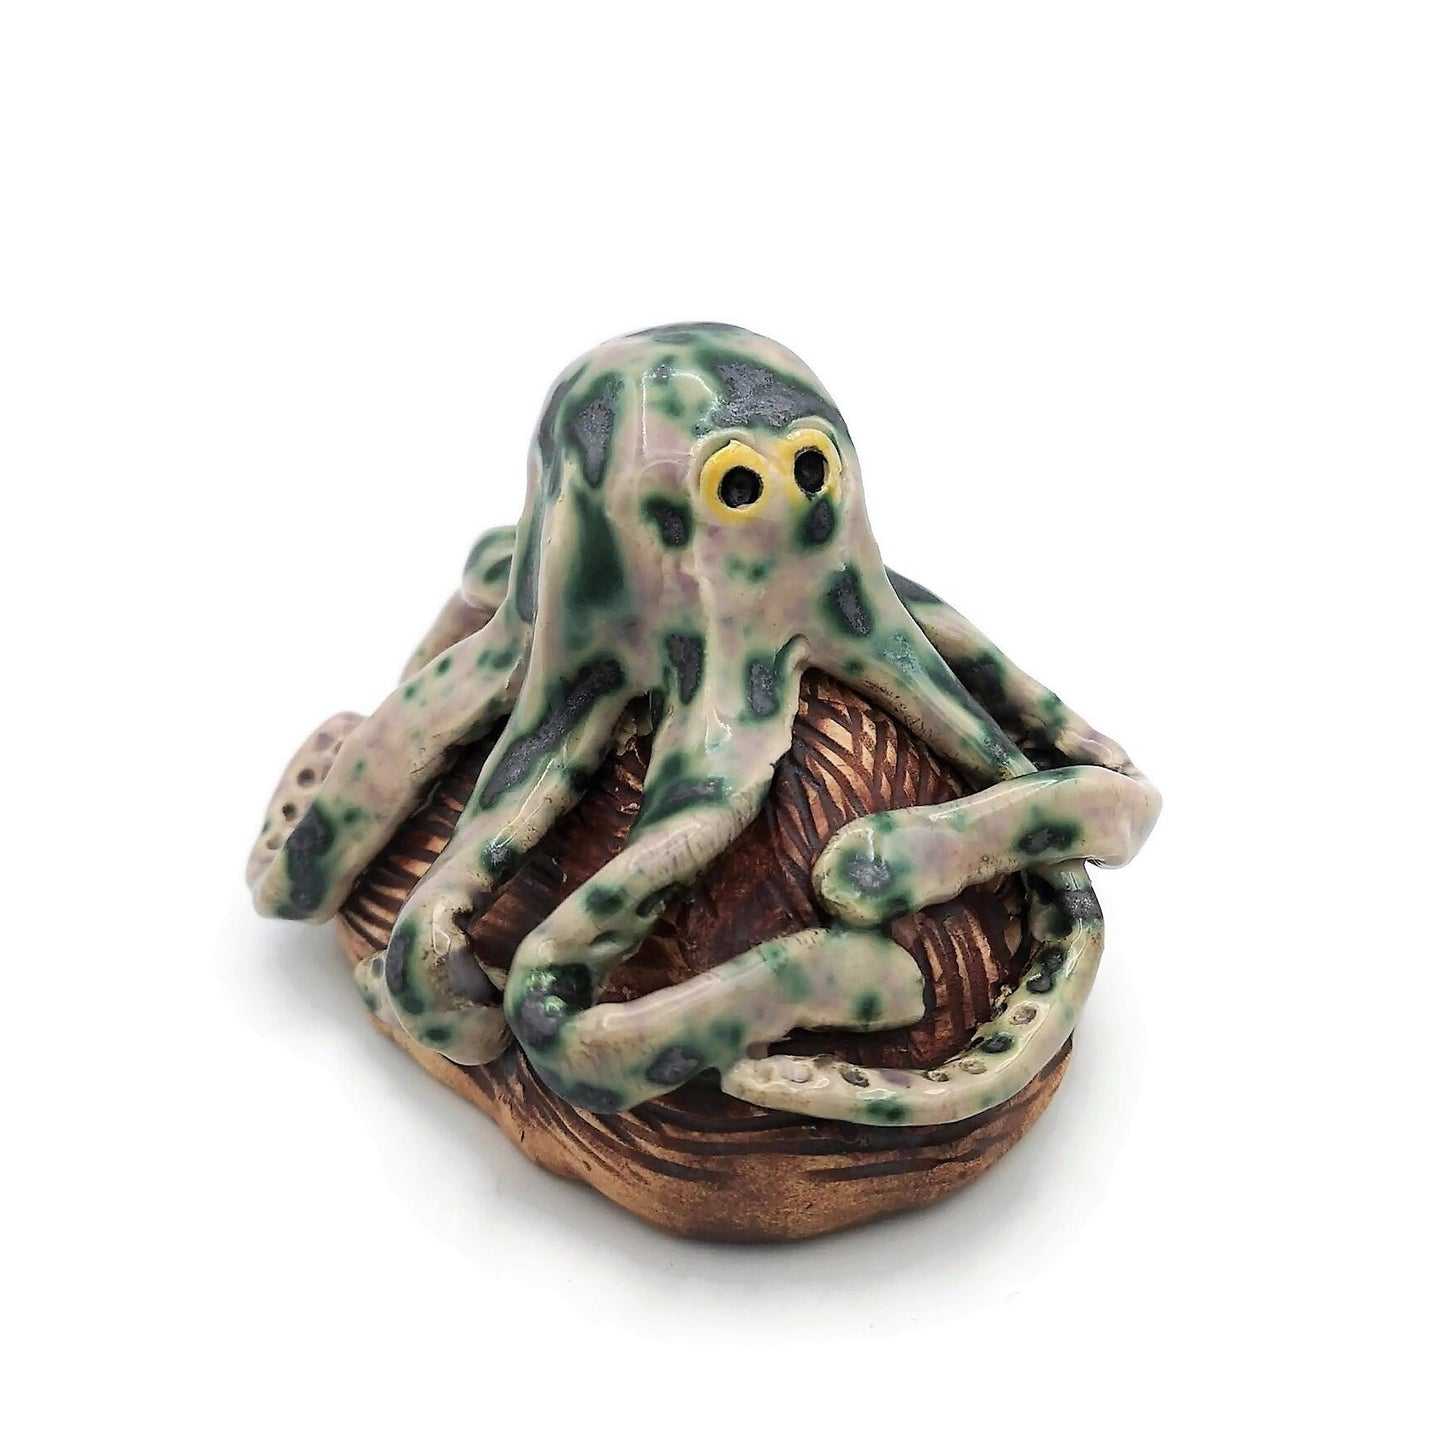 Modern Handmade Ceramic Sculpture, Octopus Contemporary Art, Custom Fish Tank Decor, Coastal Decor Table Sculpture, Aquarium Decor - Ceramica Ana Rafael